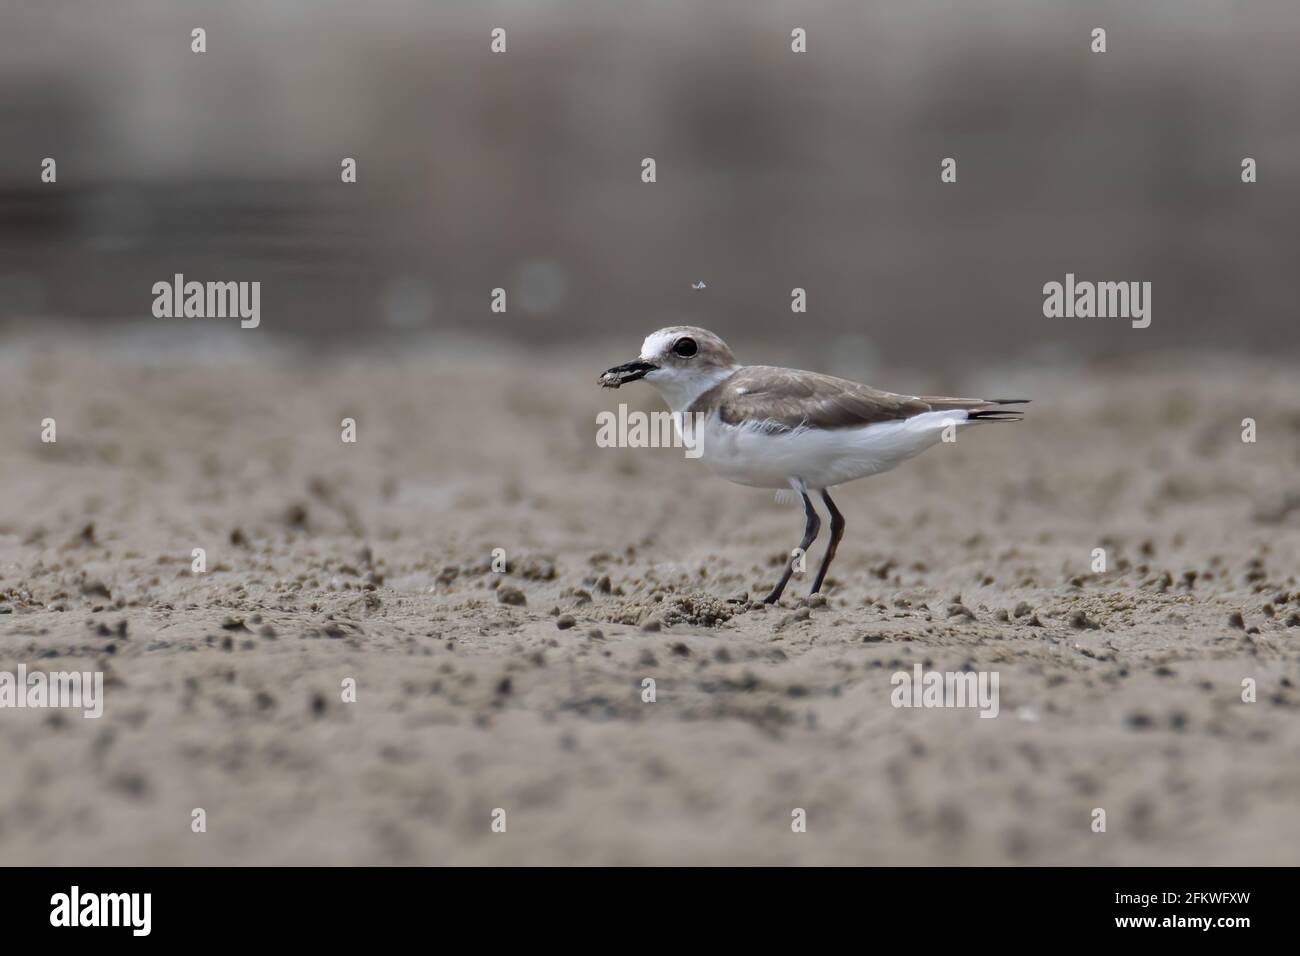 Nature wildlife image of Sand plover water bird on beach Stock Photo